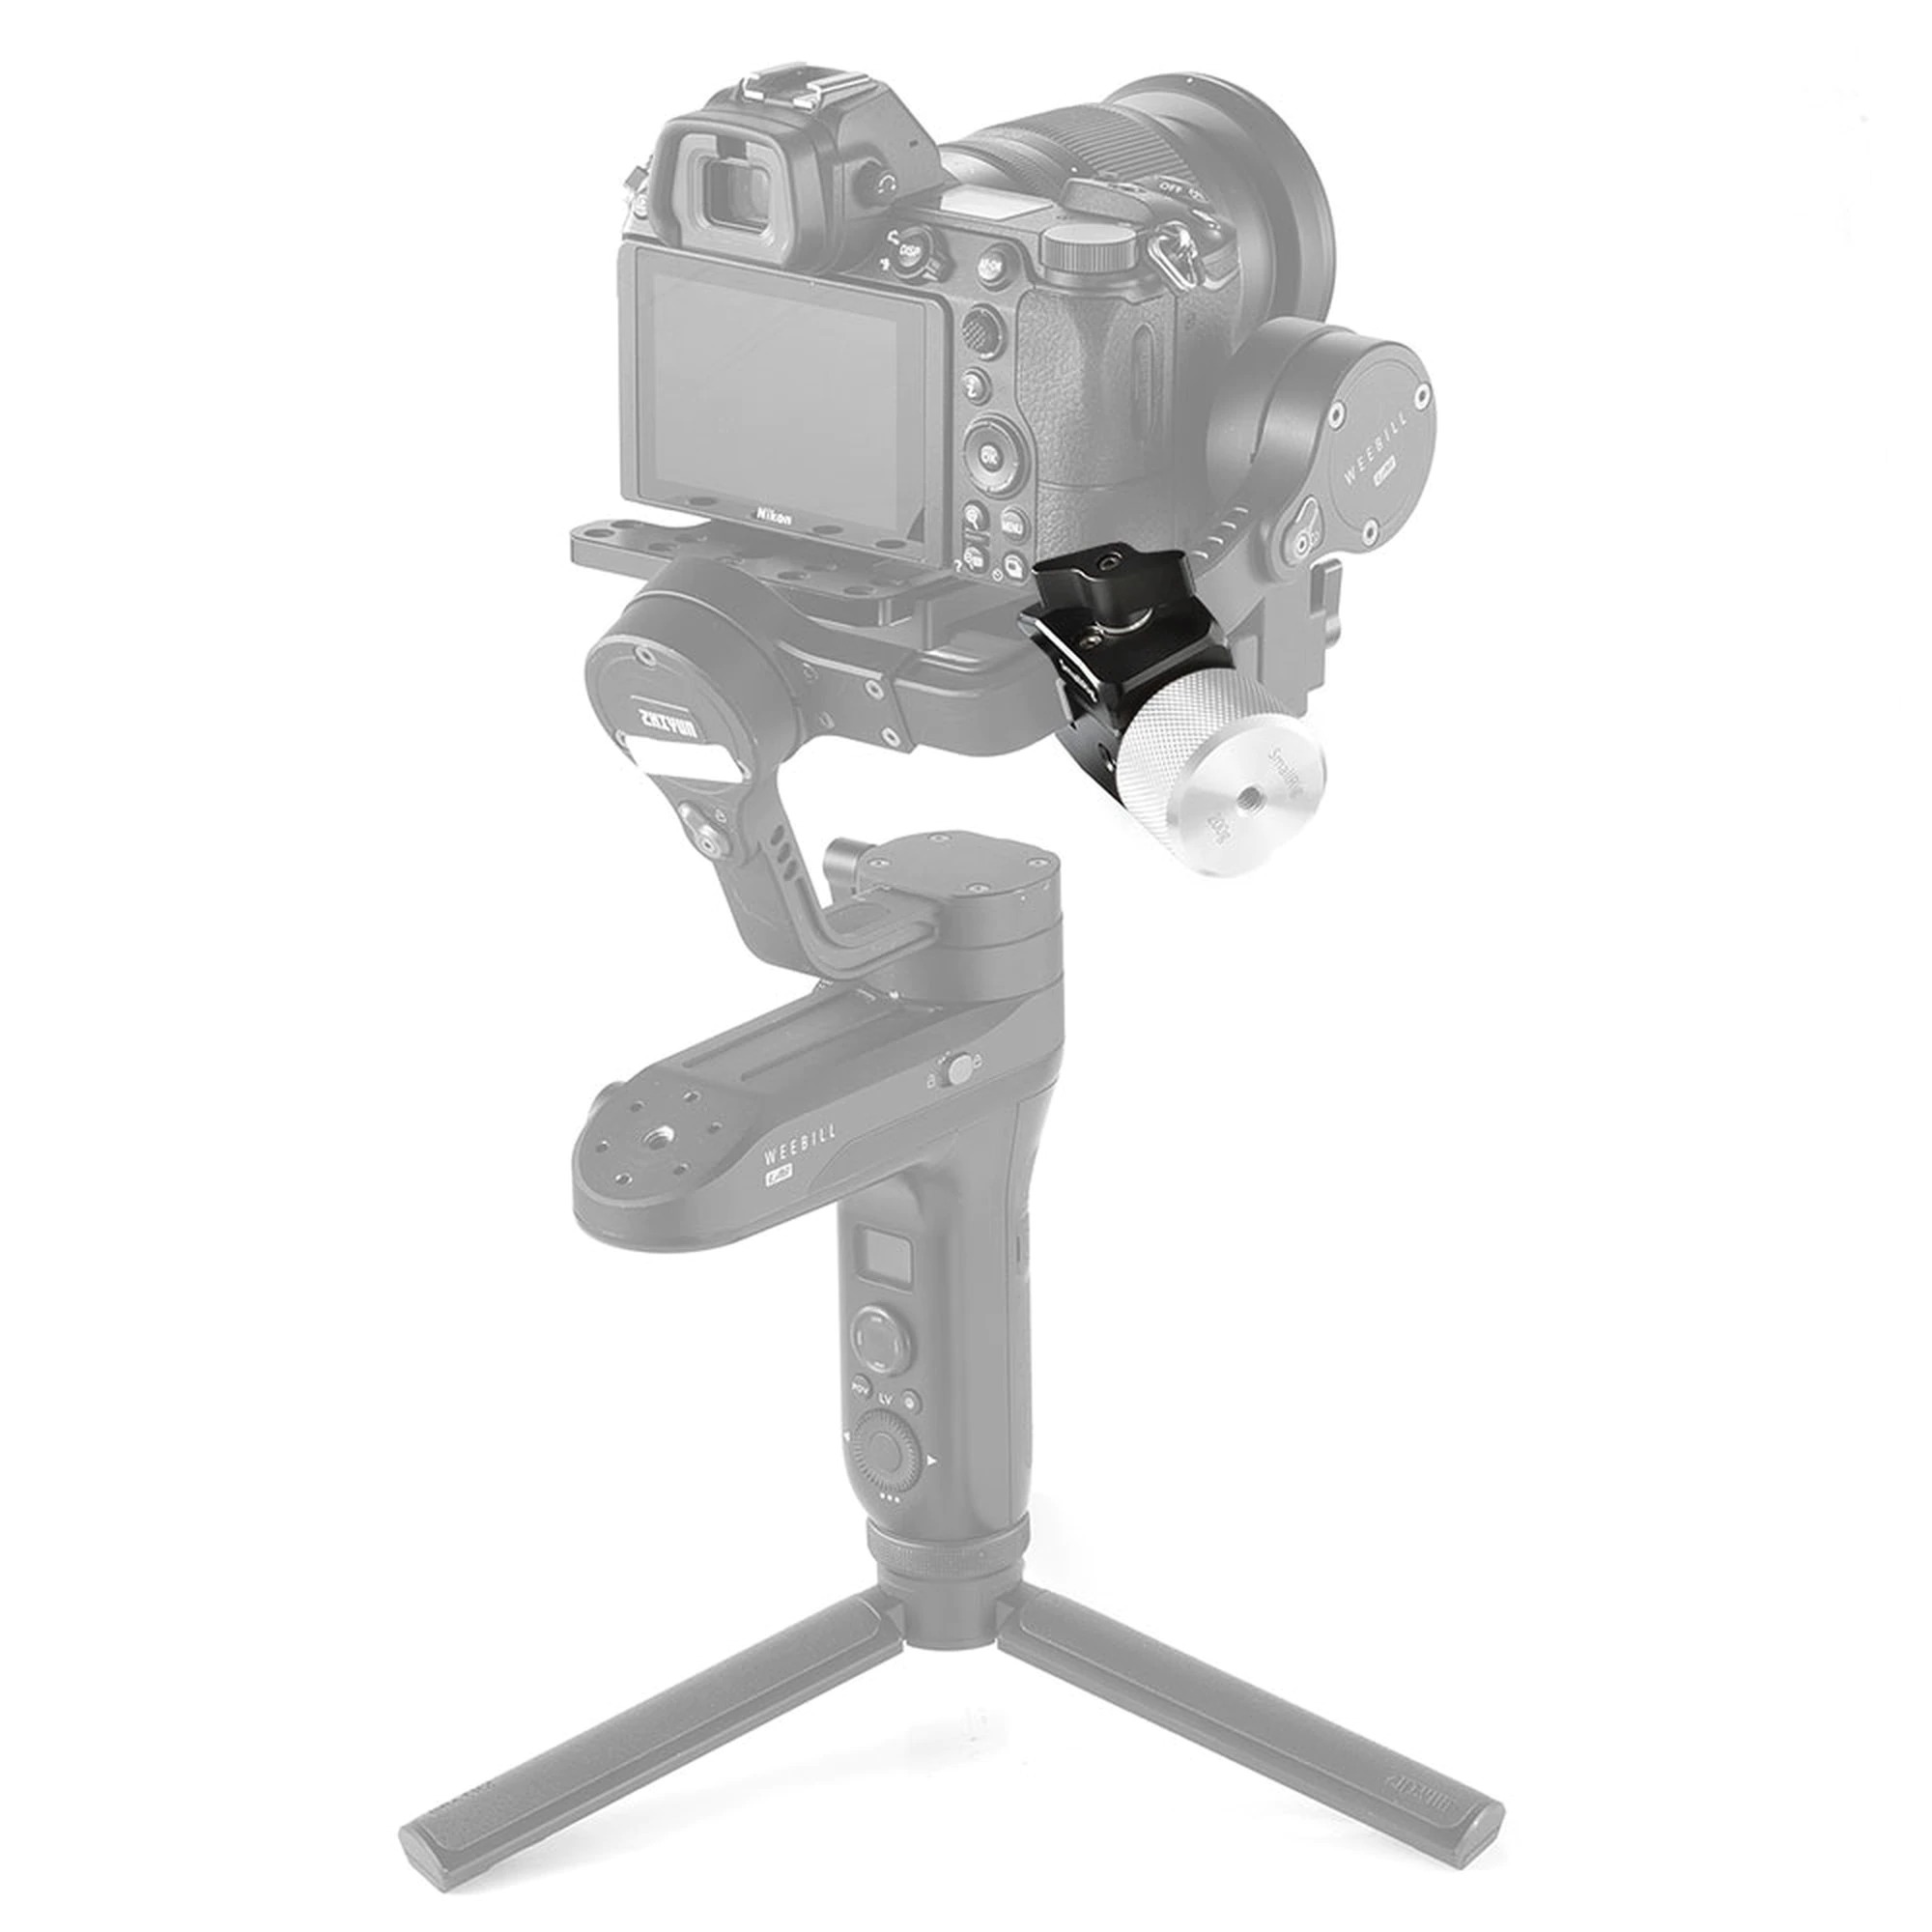 SmallRig Counterweight & Mounting Clamp Kit for DJI Ronin-S/Ronin-SC and Zhiyun WEEBILL-S/CRANE Series BSS2465 ชุดเวทถ่วงน้ำหนัก 100 และ 200 กรัม พร้อมแขนจับกิมบอล ช่วยในการตั้งบาลานซ์ สำหรับกล้อง Blackmagic Pocket 4K/6K ราคา 1400 บาท